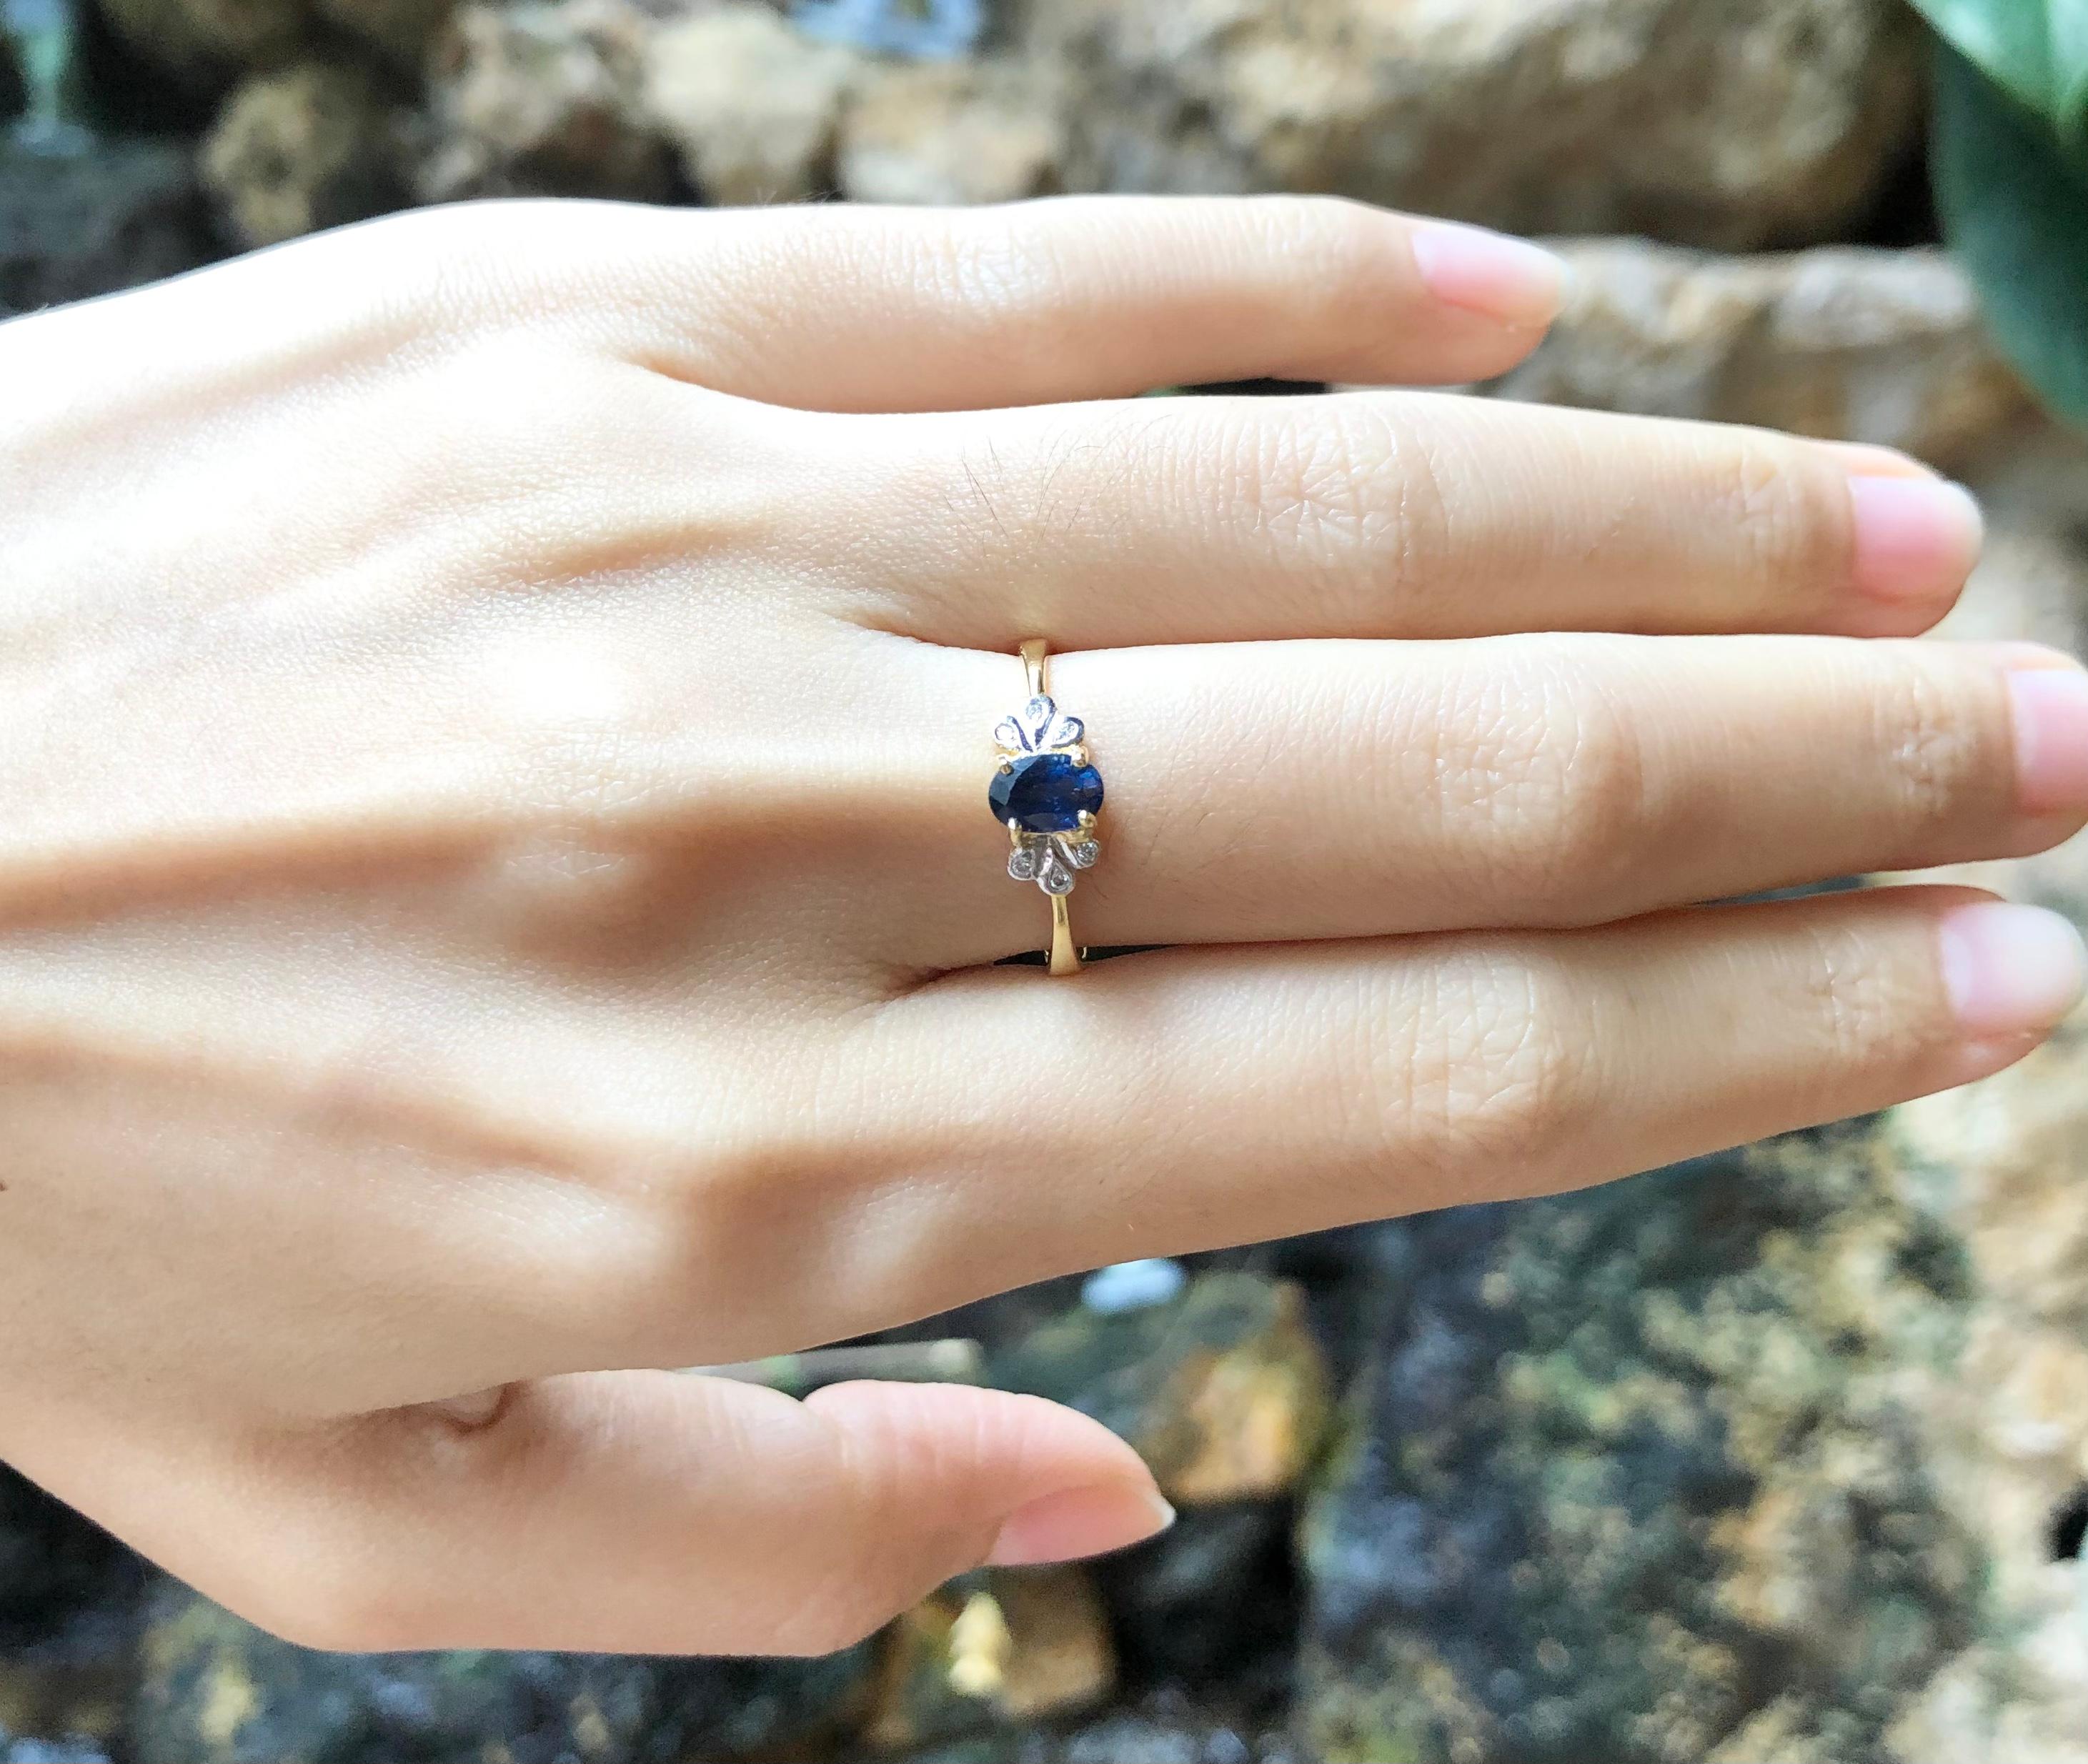 Blue Sapphire 0.69 carat with Diamond 0.03 carat Ring set in 18 Karat Gold Settings

Width:  1.0 cm 
Length: 0.6 cm
Ring Size: 54
Total Weight: 2.42 grams

Blue Sapphire 
Width:  0.4 cm 
Length: 0.6 cm

